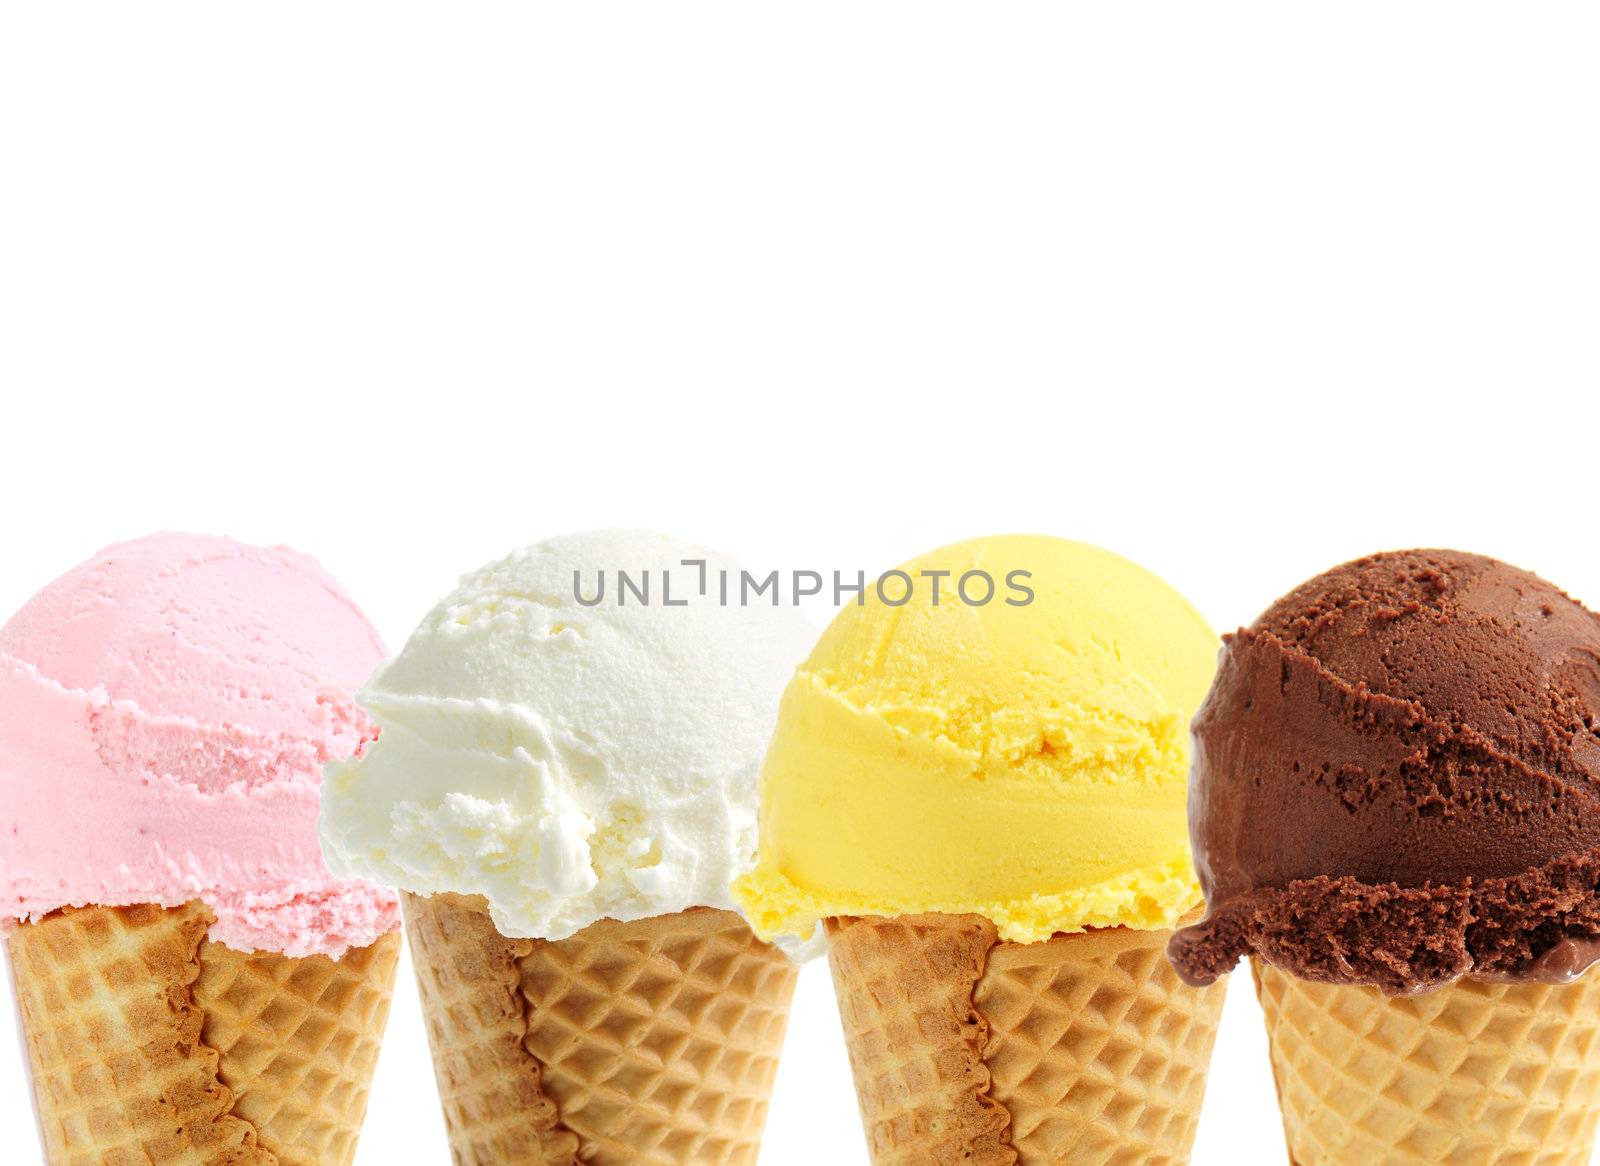 Assorted ice cream in sugar cones on white background